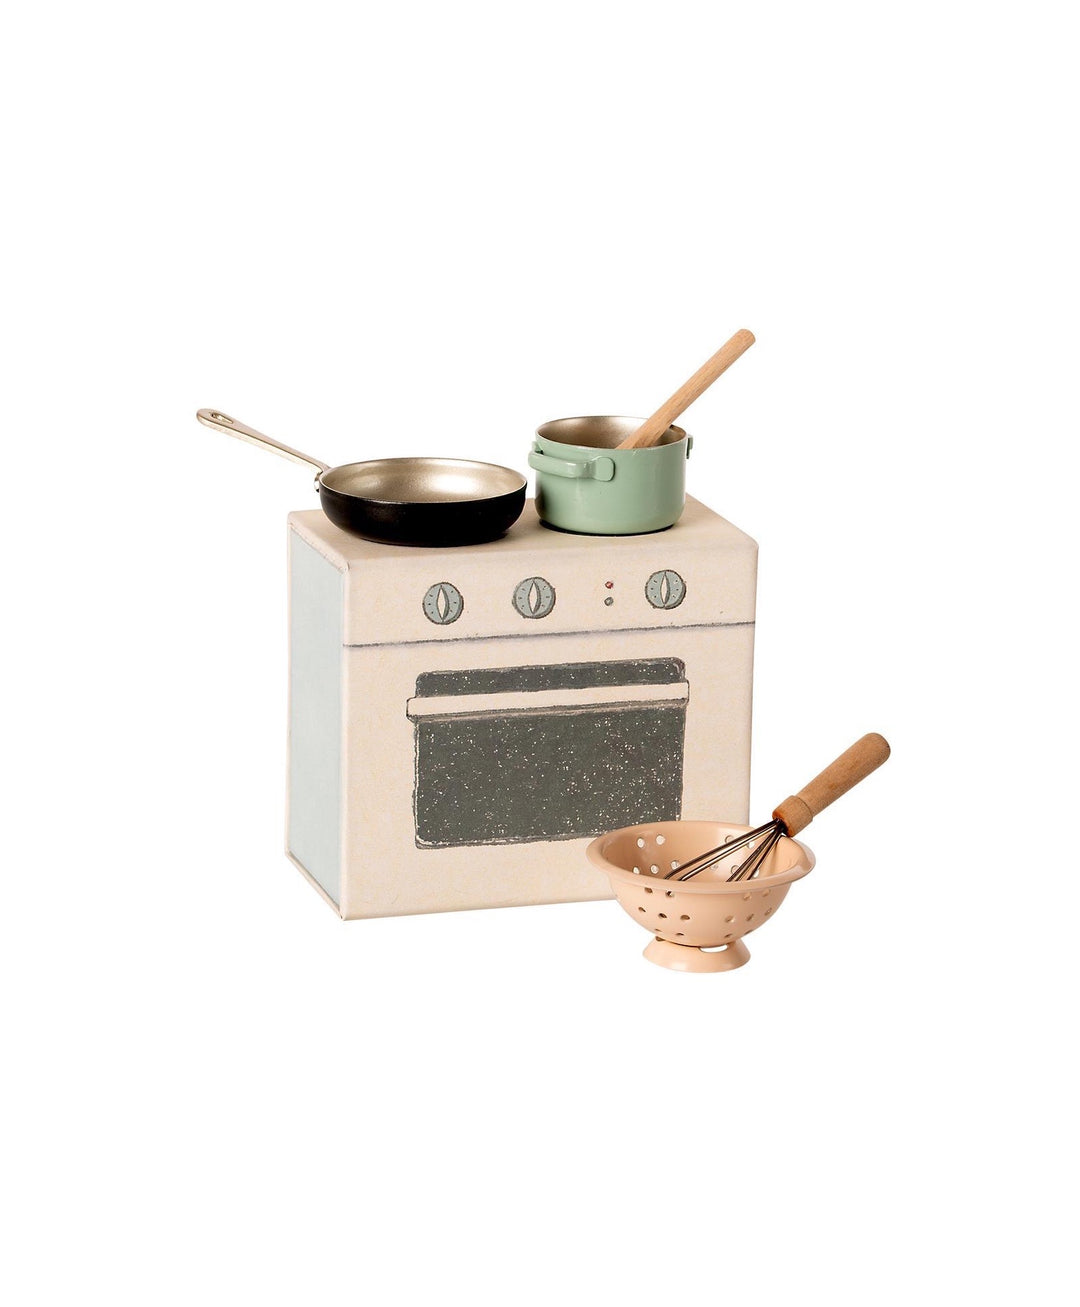 Maileg Cooking Set, Miniature